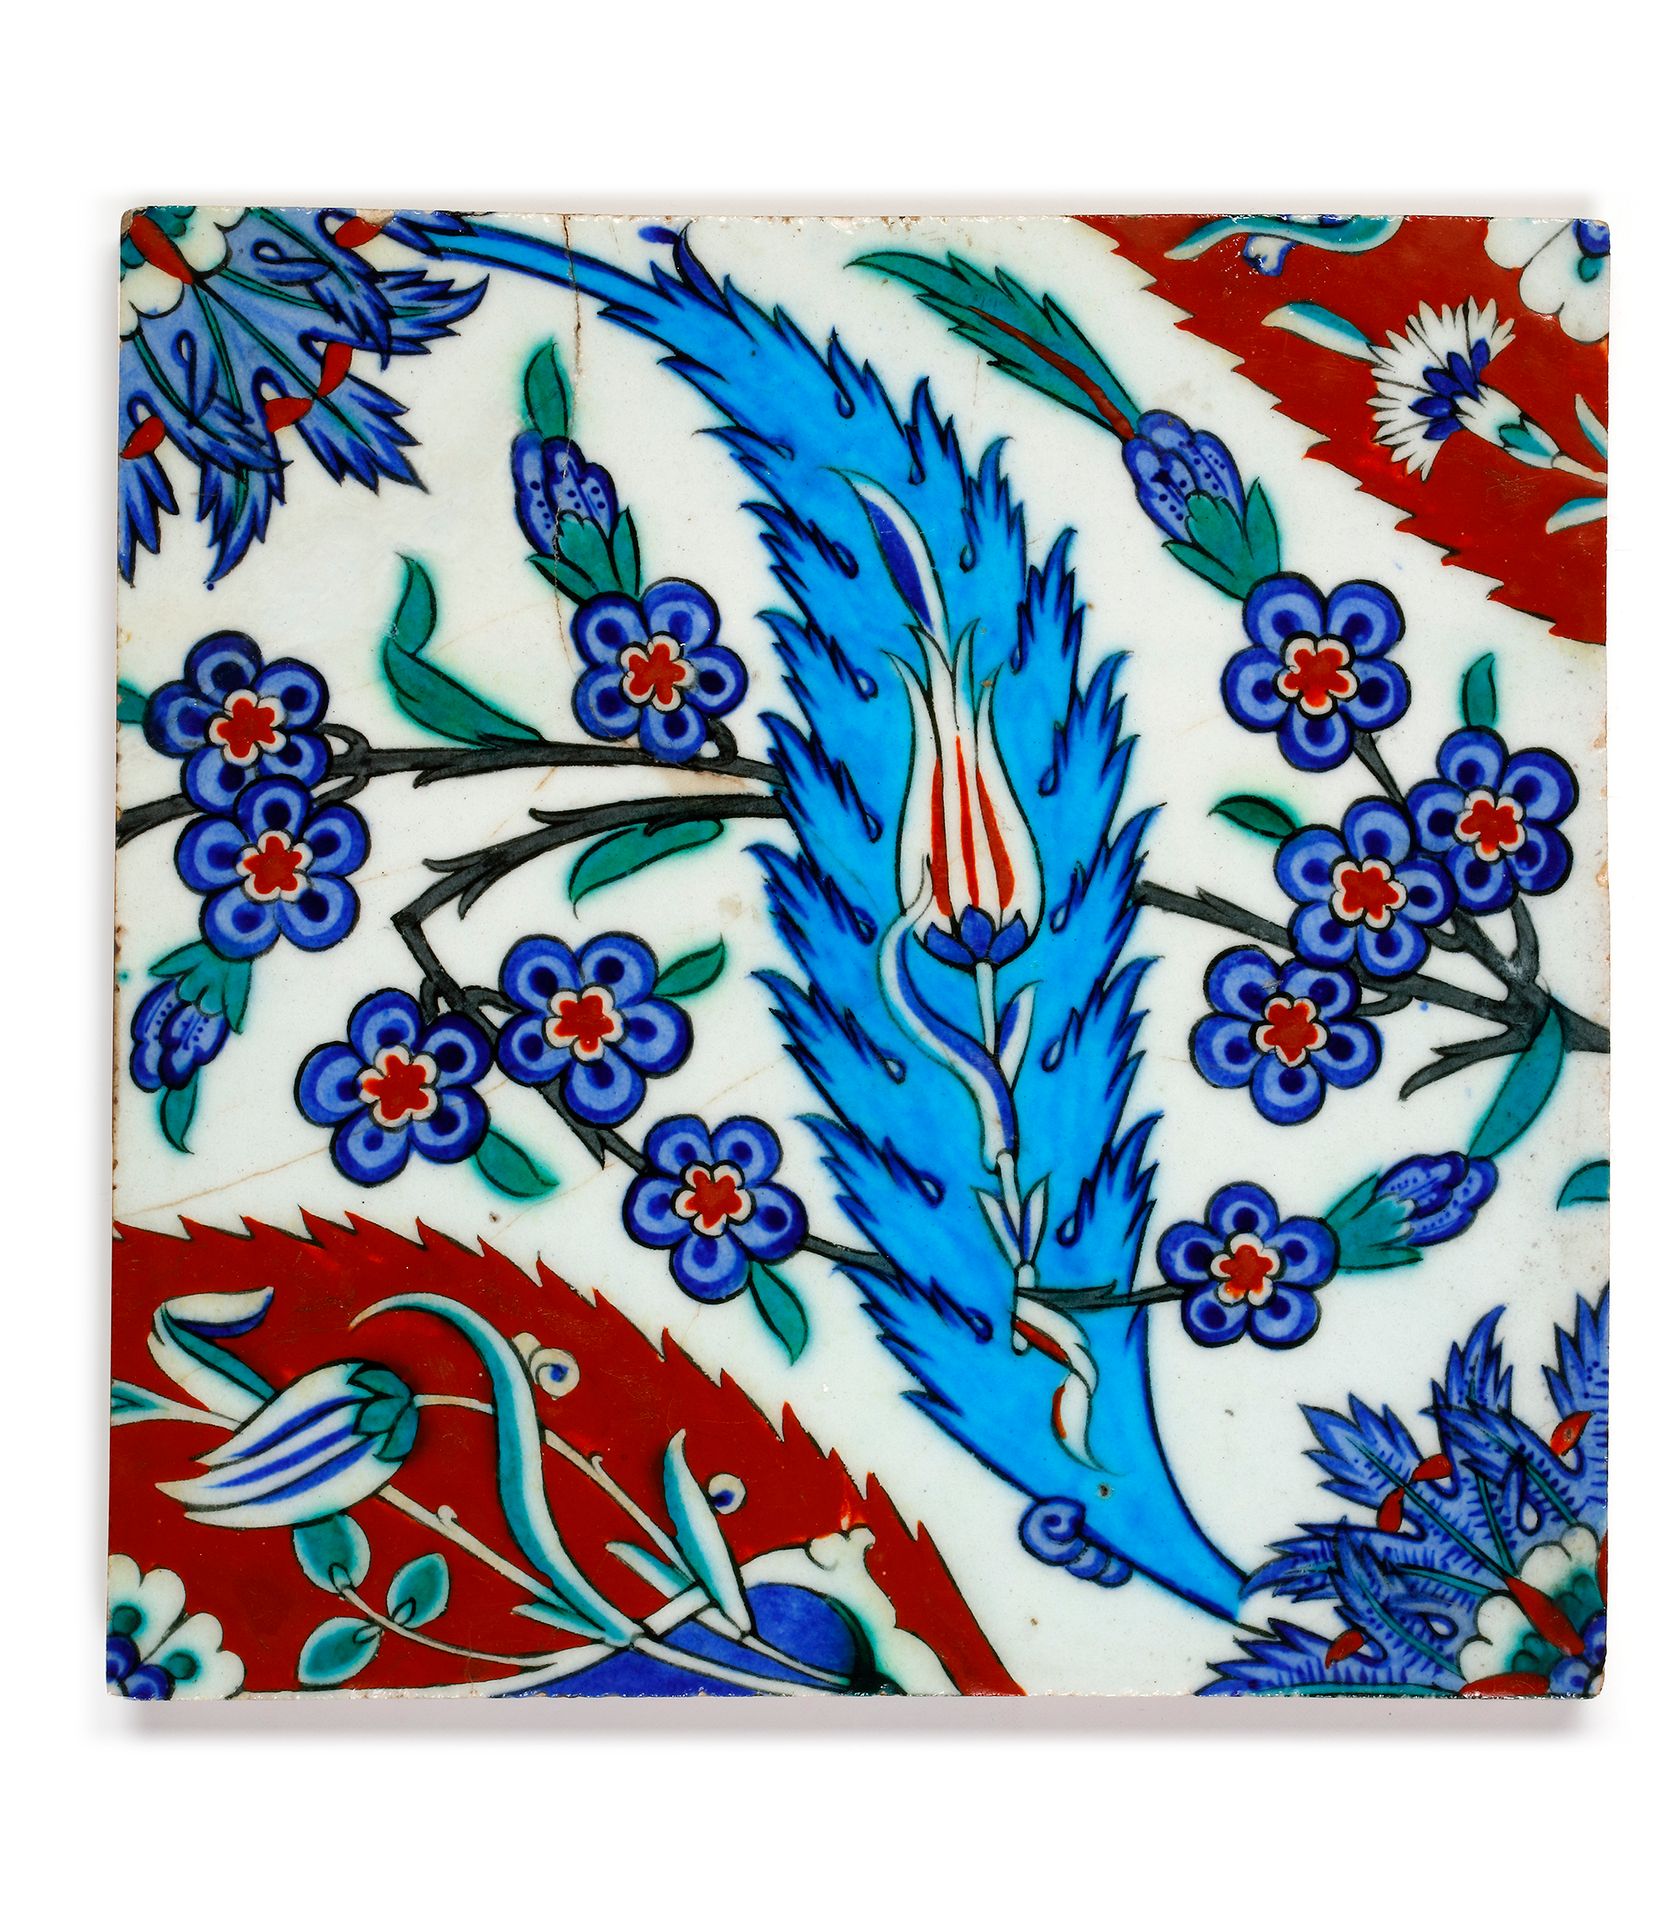 AN IZNIK POLYCHROME TILE, TURKEY, CIRCA 1575 方形，饰以釉下钴蓝、绿松石、绿色和浮雕红，以黑色勾勒出大的羽毛状萨兹叶&hellip;